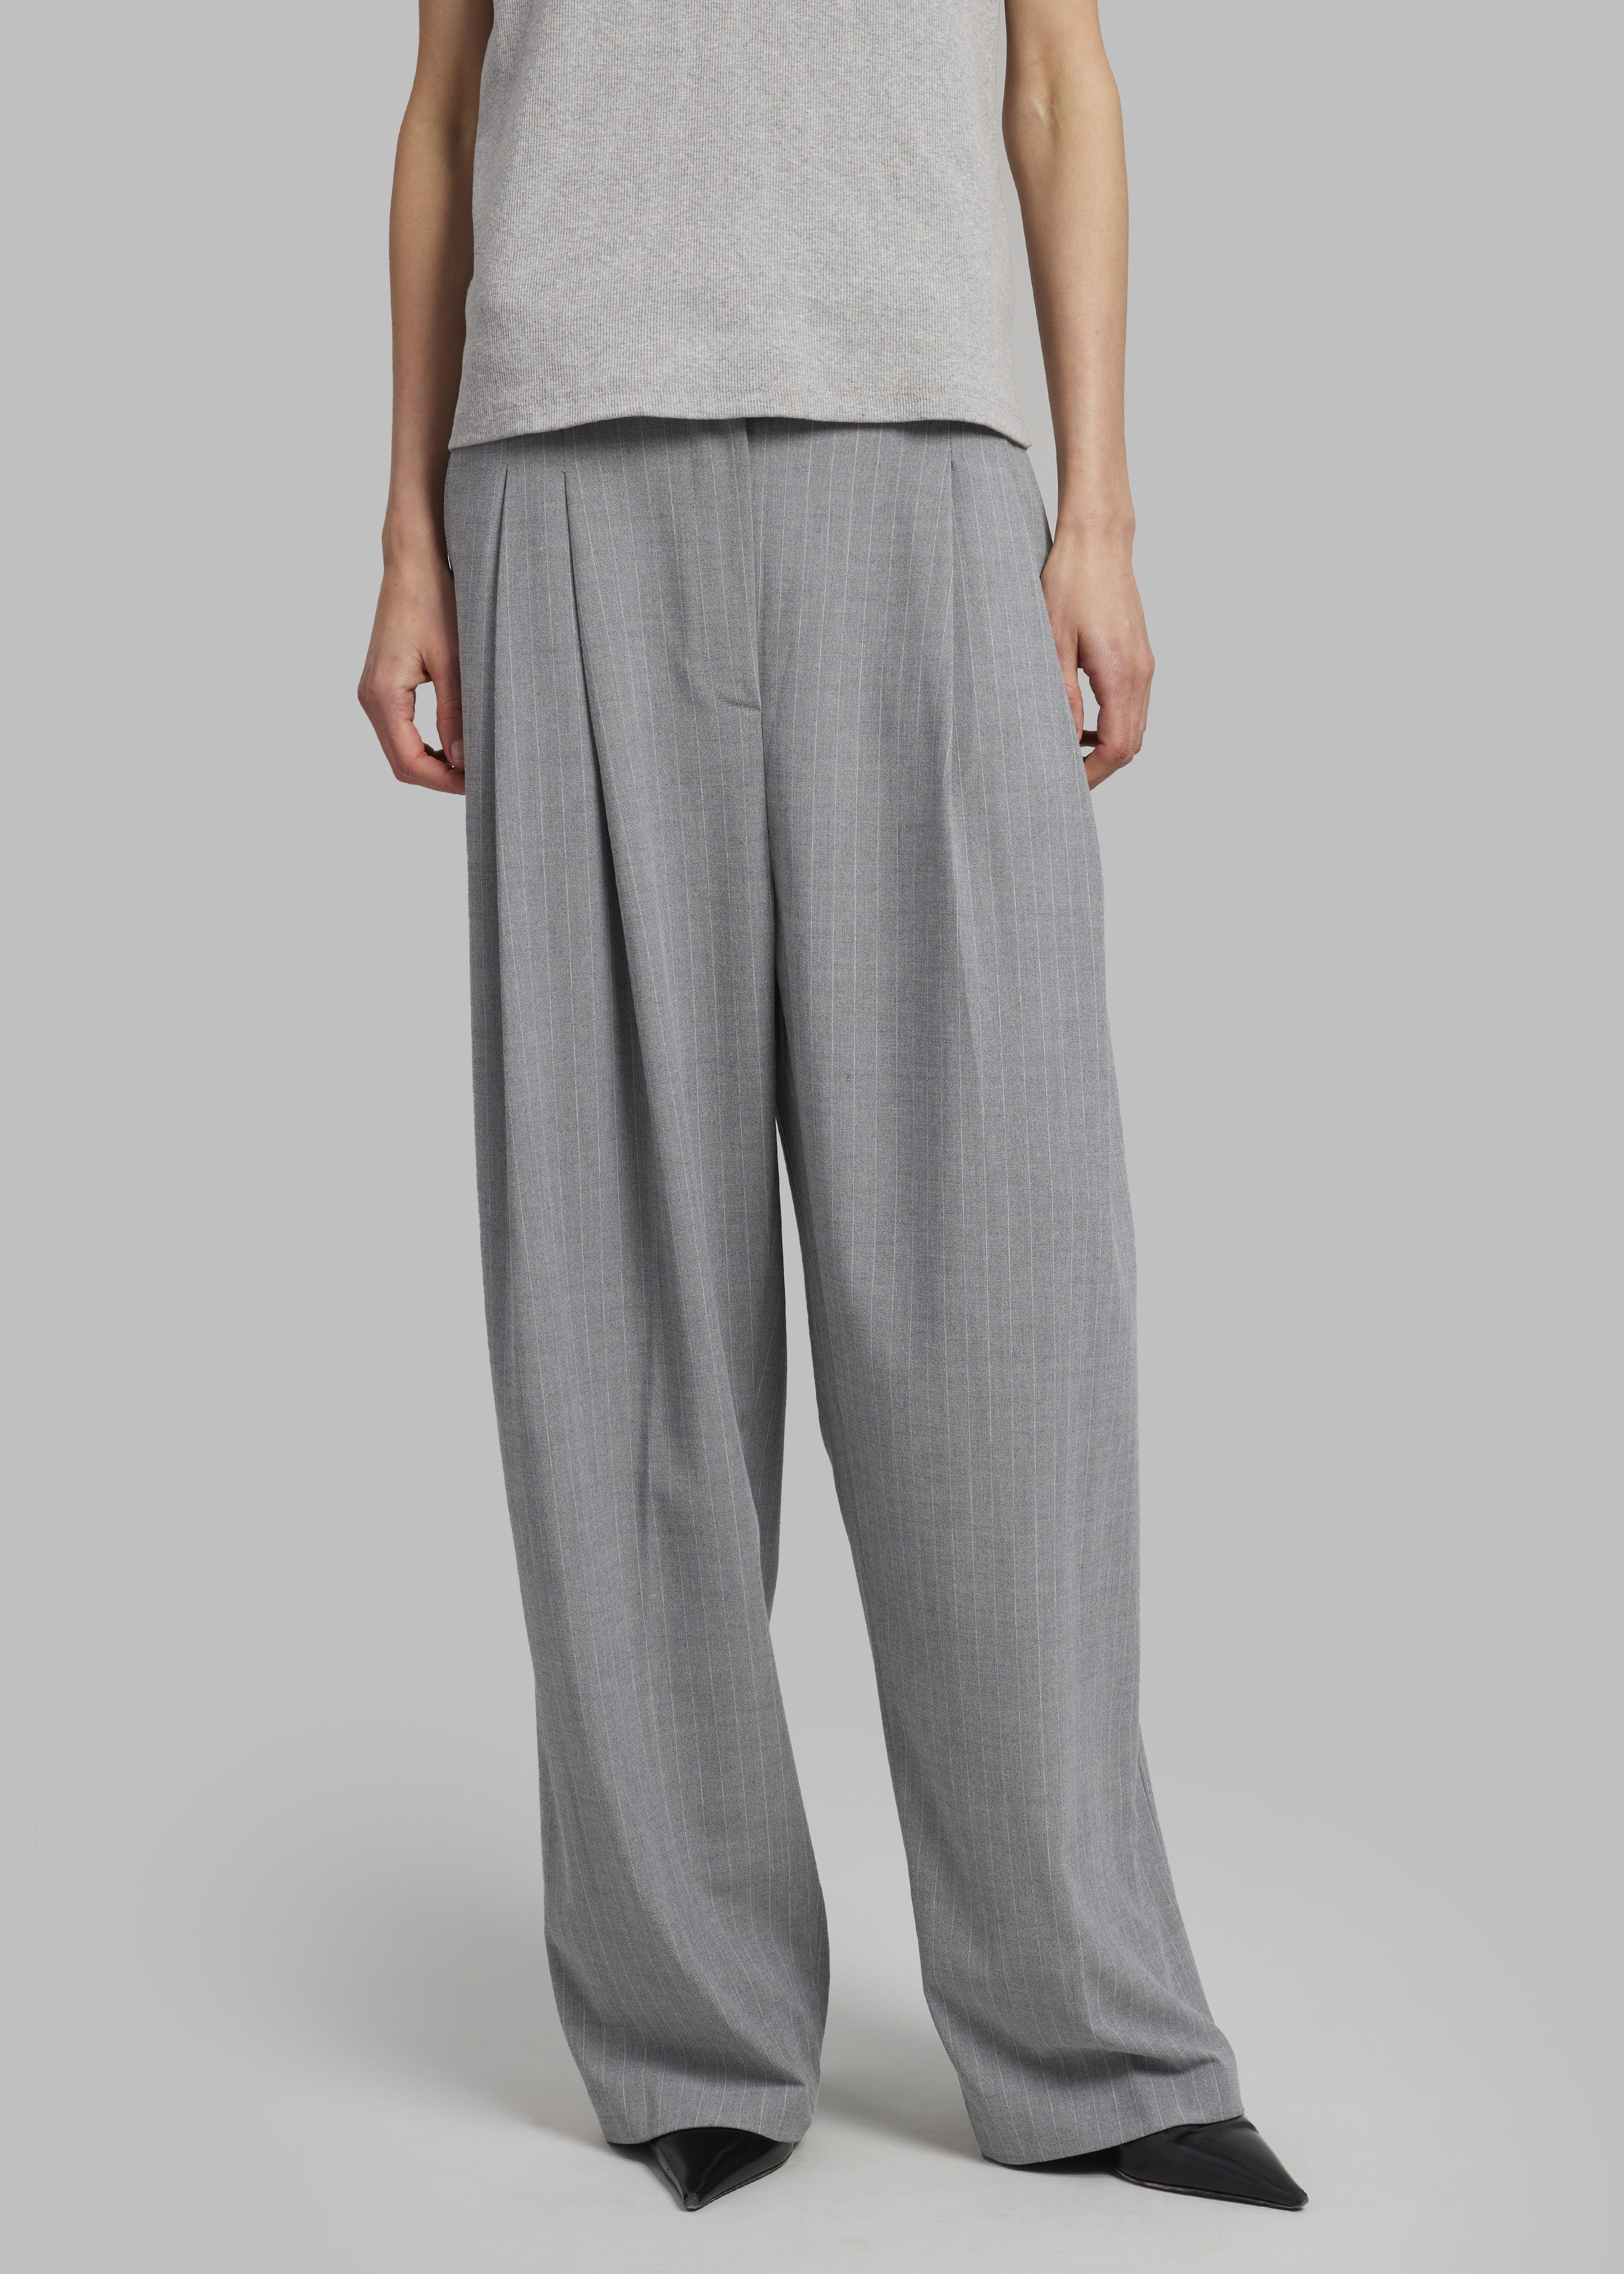 Sybil Trousers - Grey Pinstripe - 5